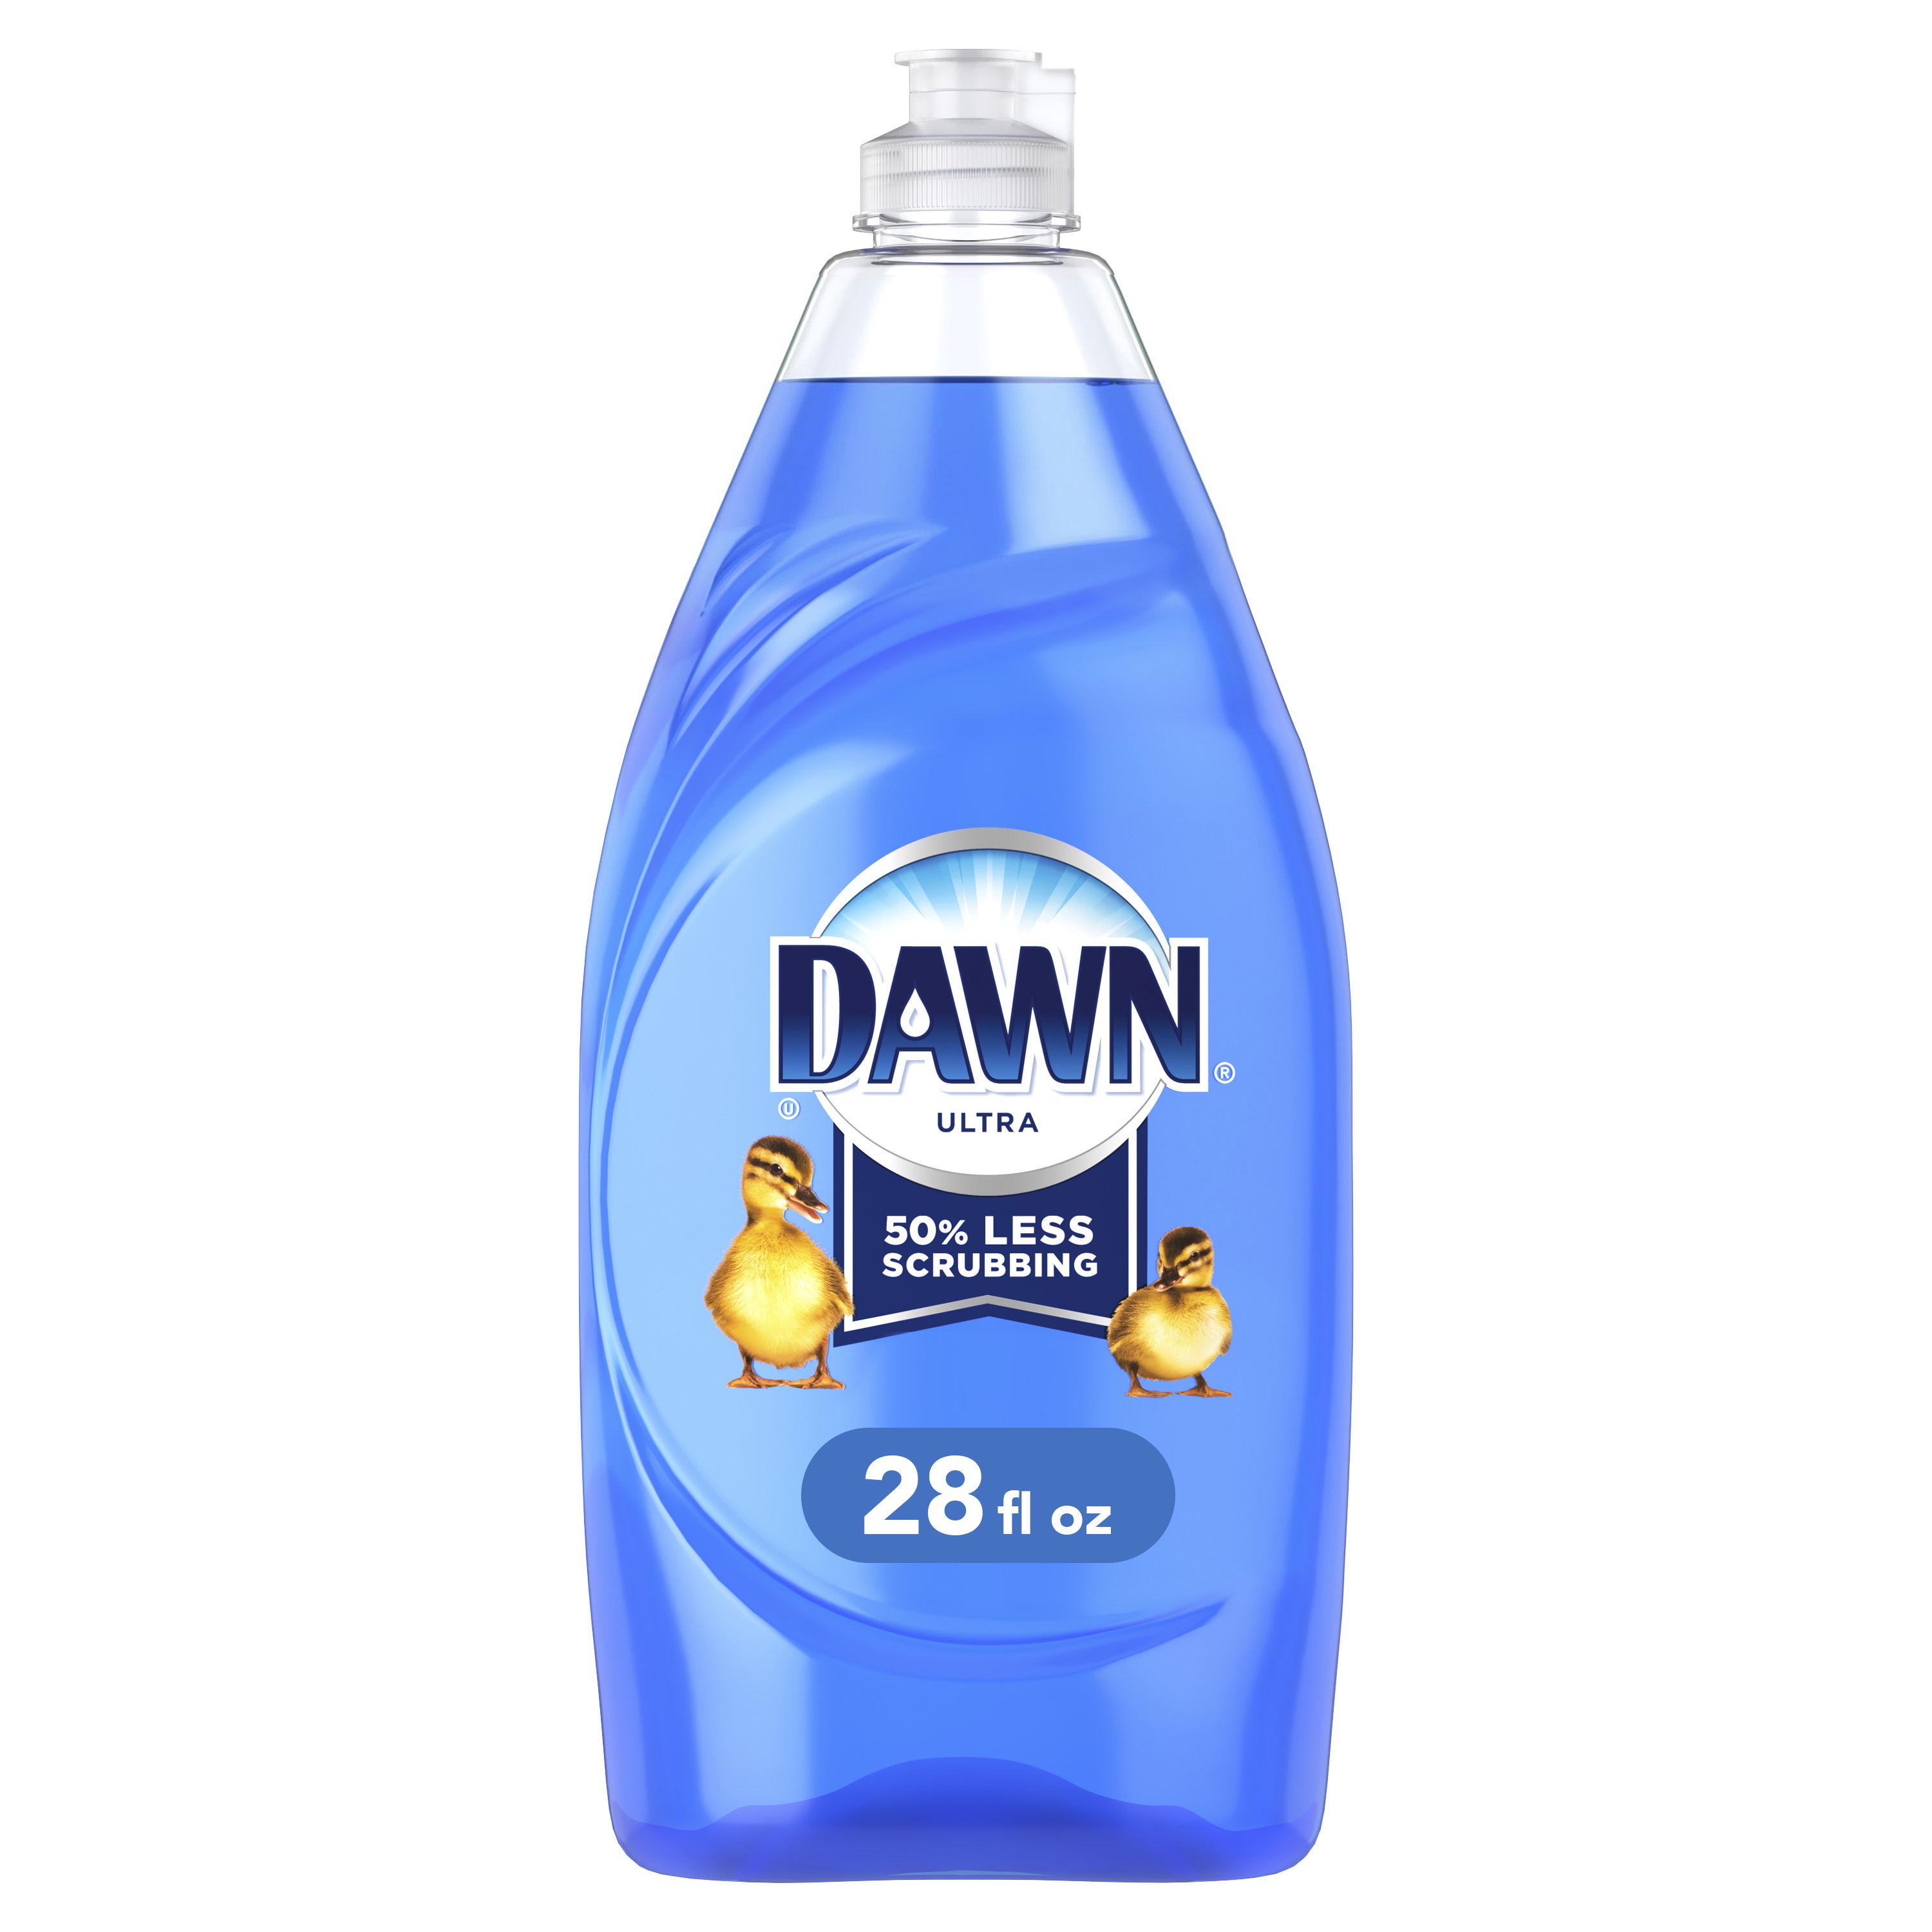 Dawn Ultra Dishwashing Liquid Dish Soap, Original Scent, 28 fl oz - 2 Pack - image 1 of 3